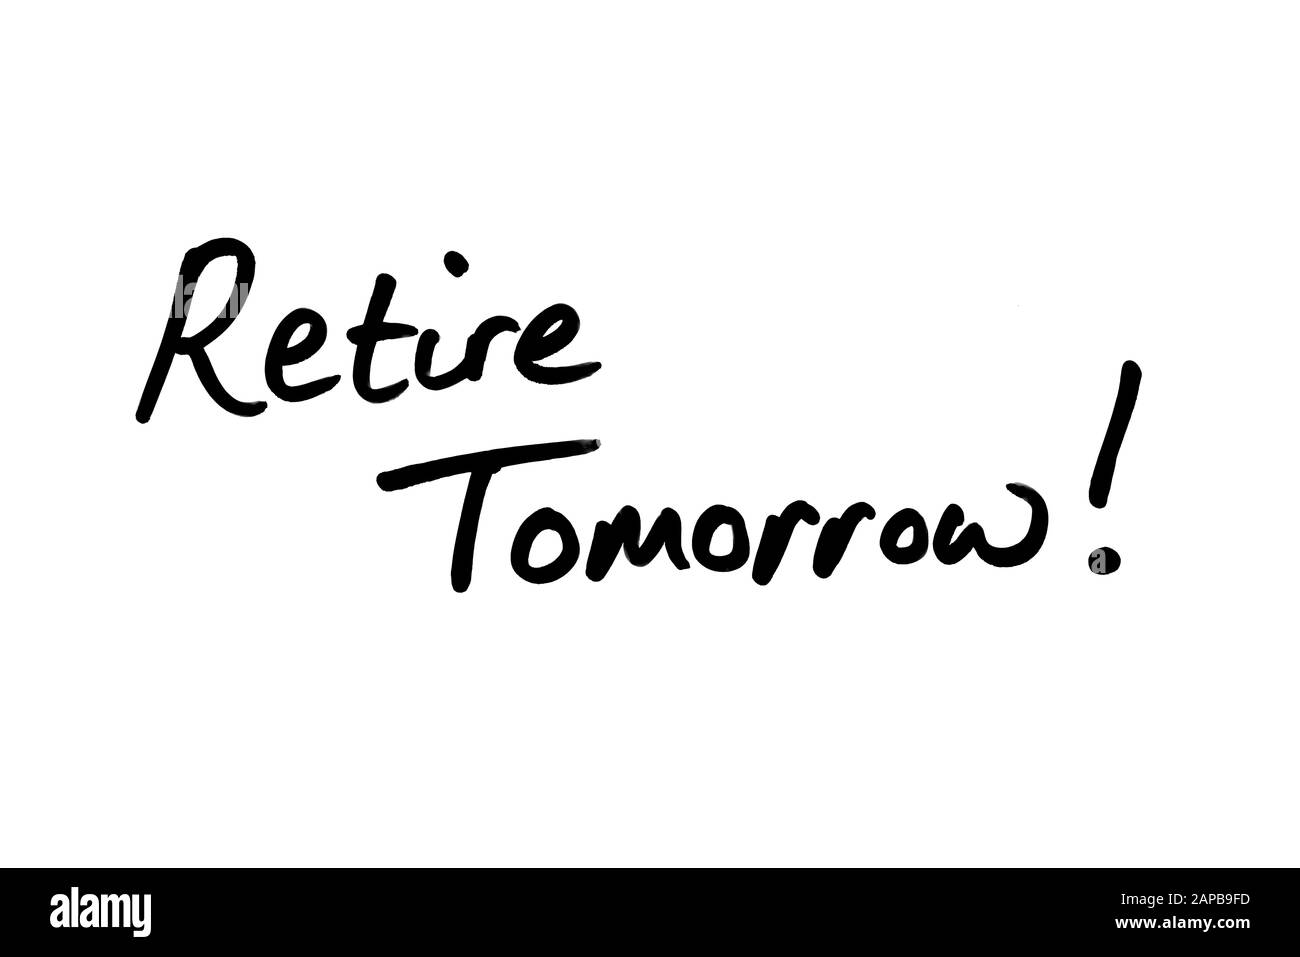 Retire Tomorrow! handwritten on a white background. Stock Photo